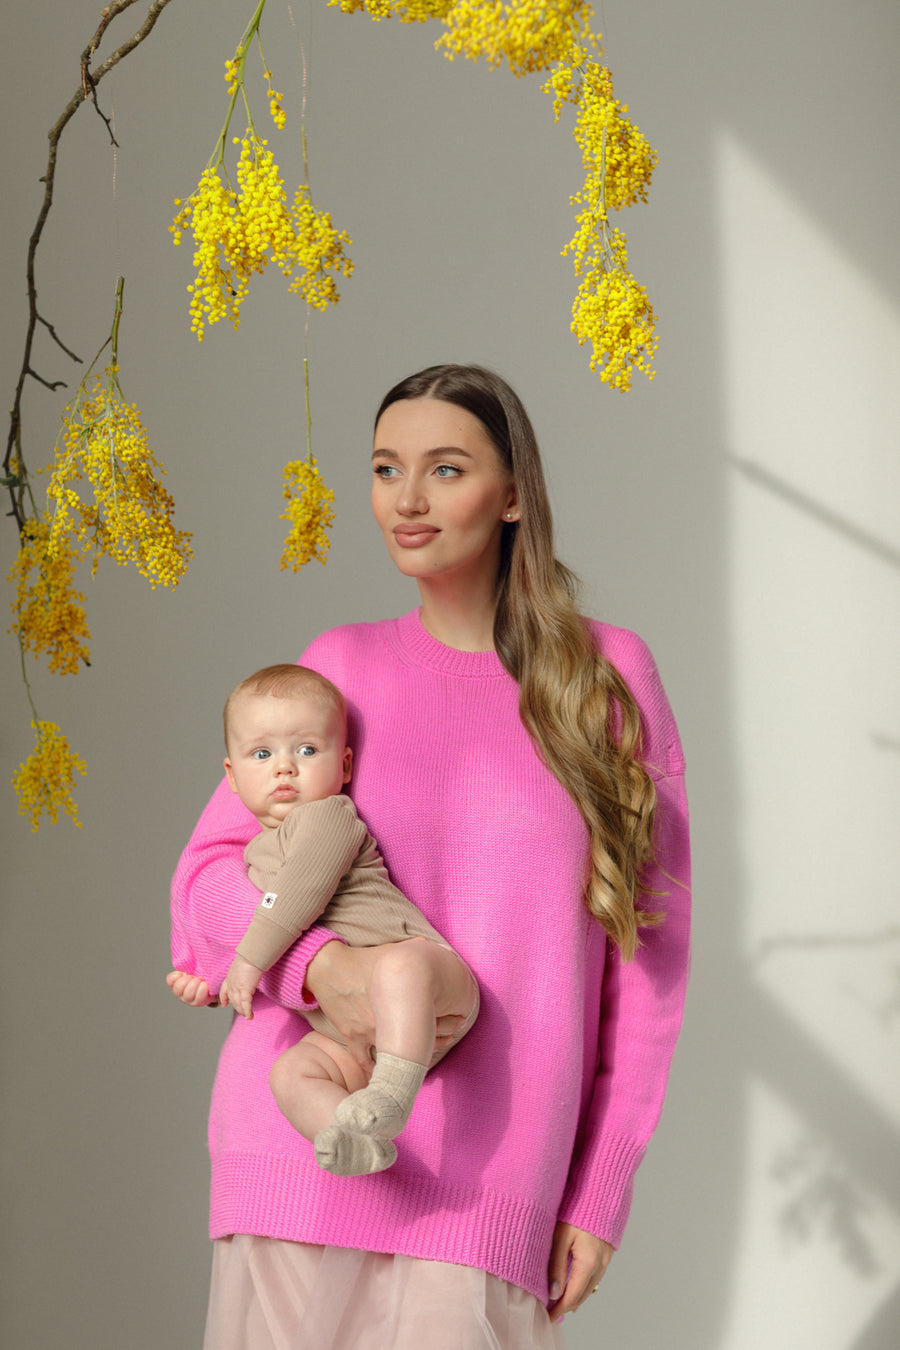 Bubble pink maternity oversized sweater